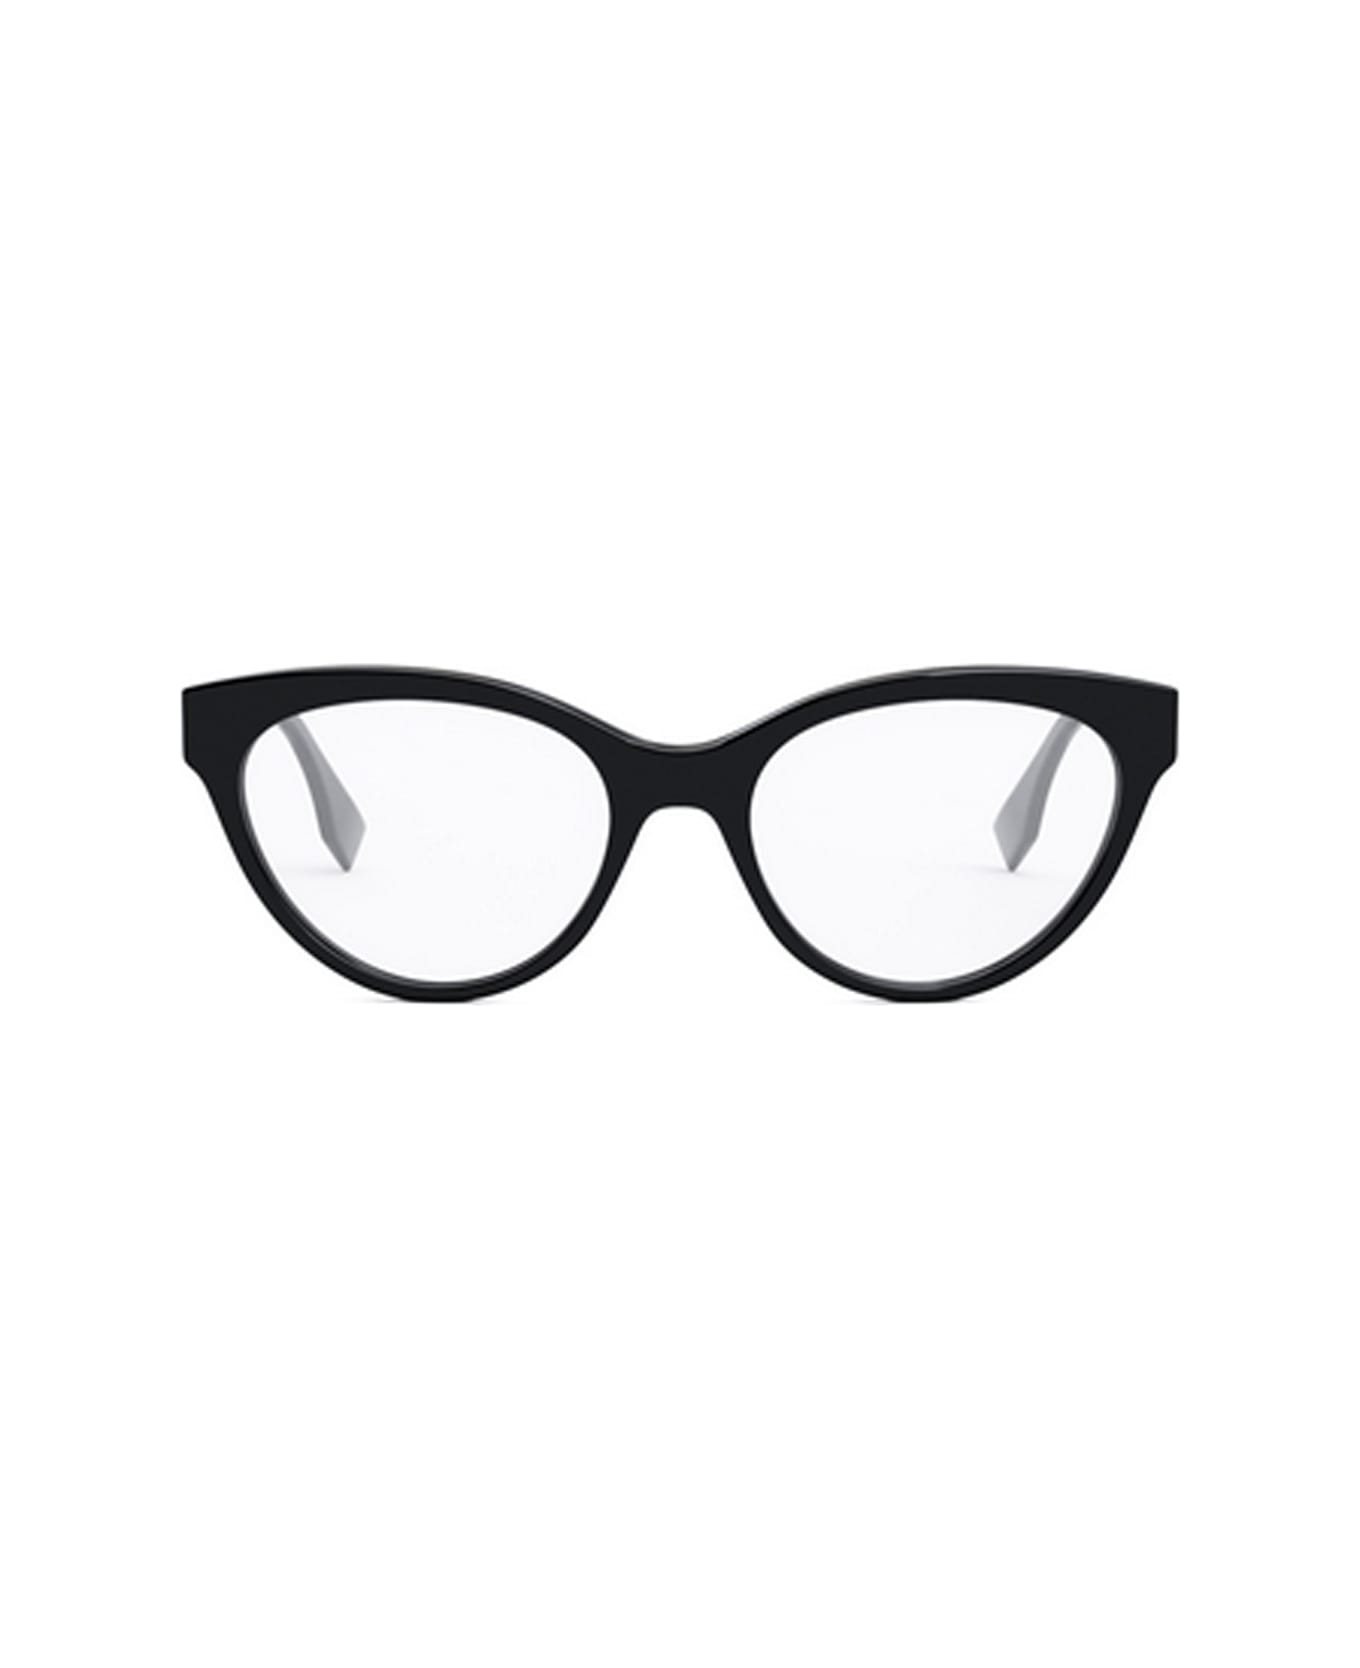 Fendi Eyewear Fe50066i 001 Glasses - Nero